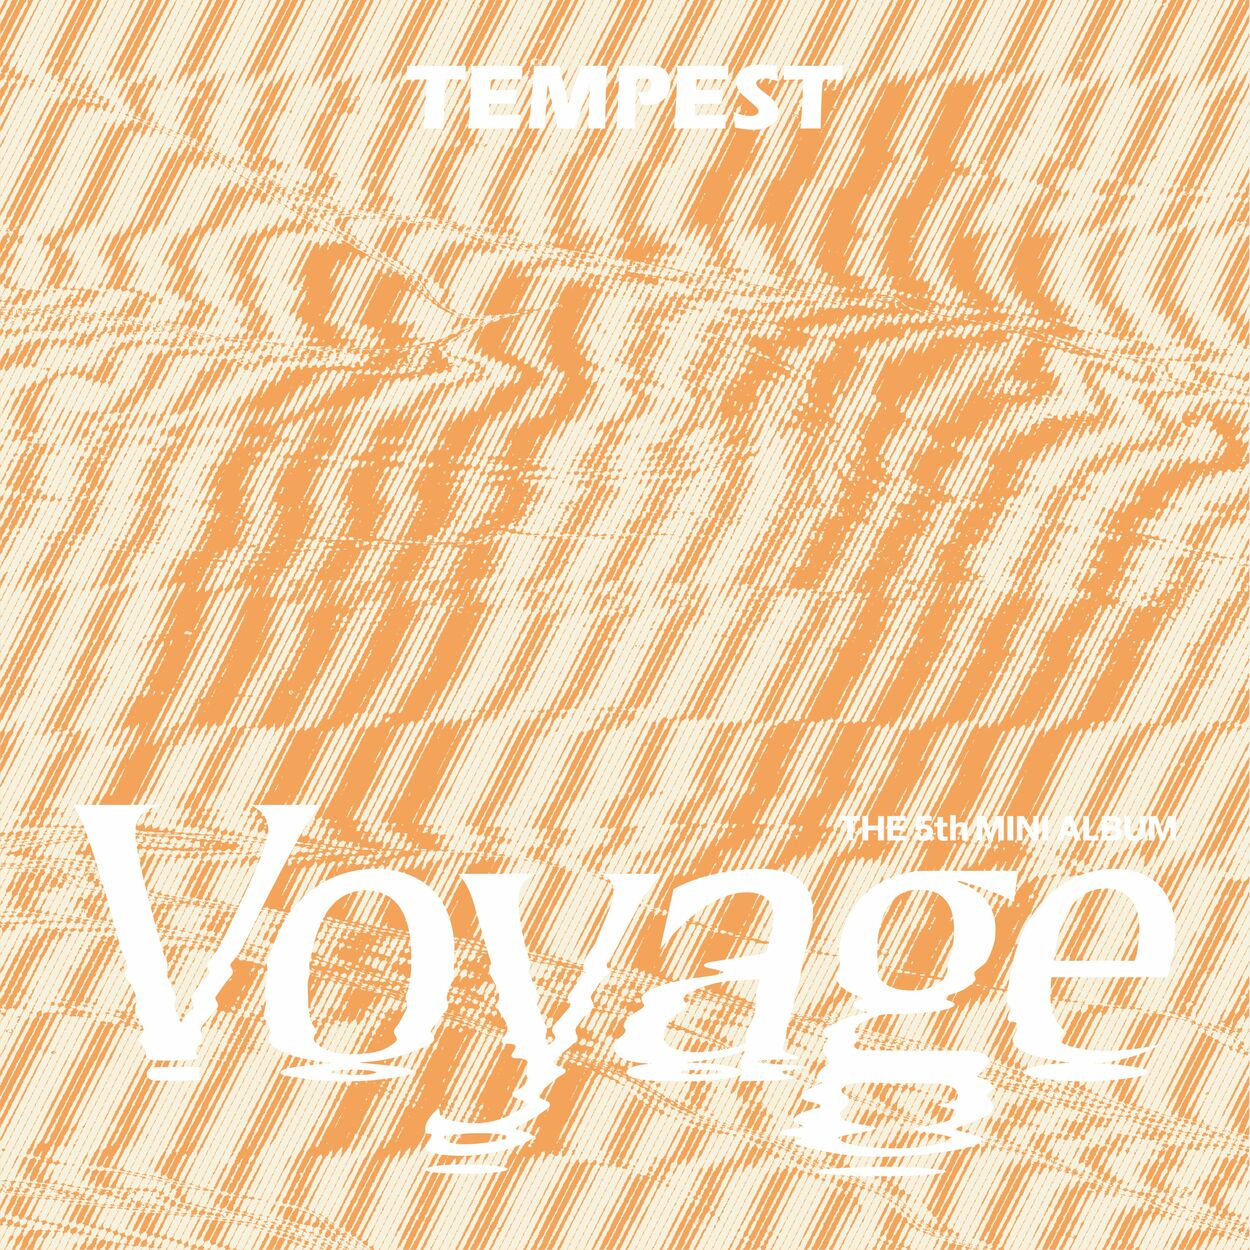 TEMPEST – TEMPEST Voyage – EP